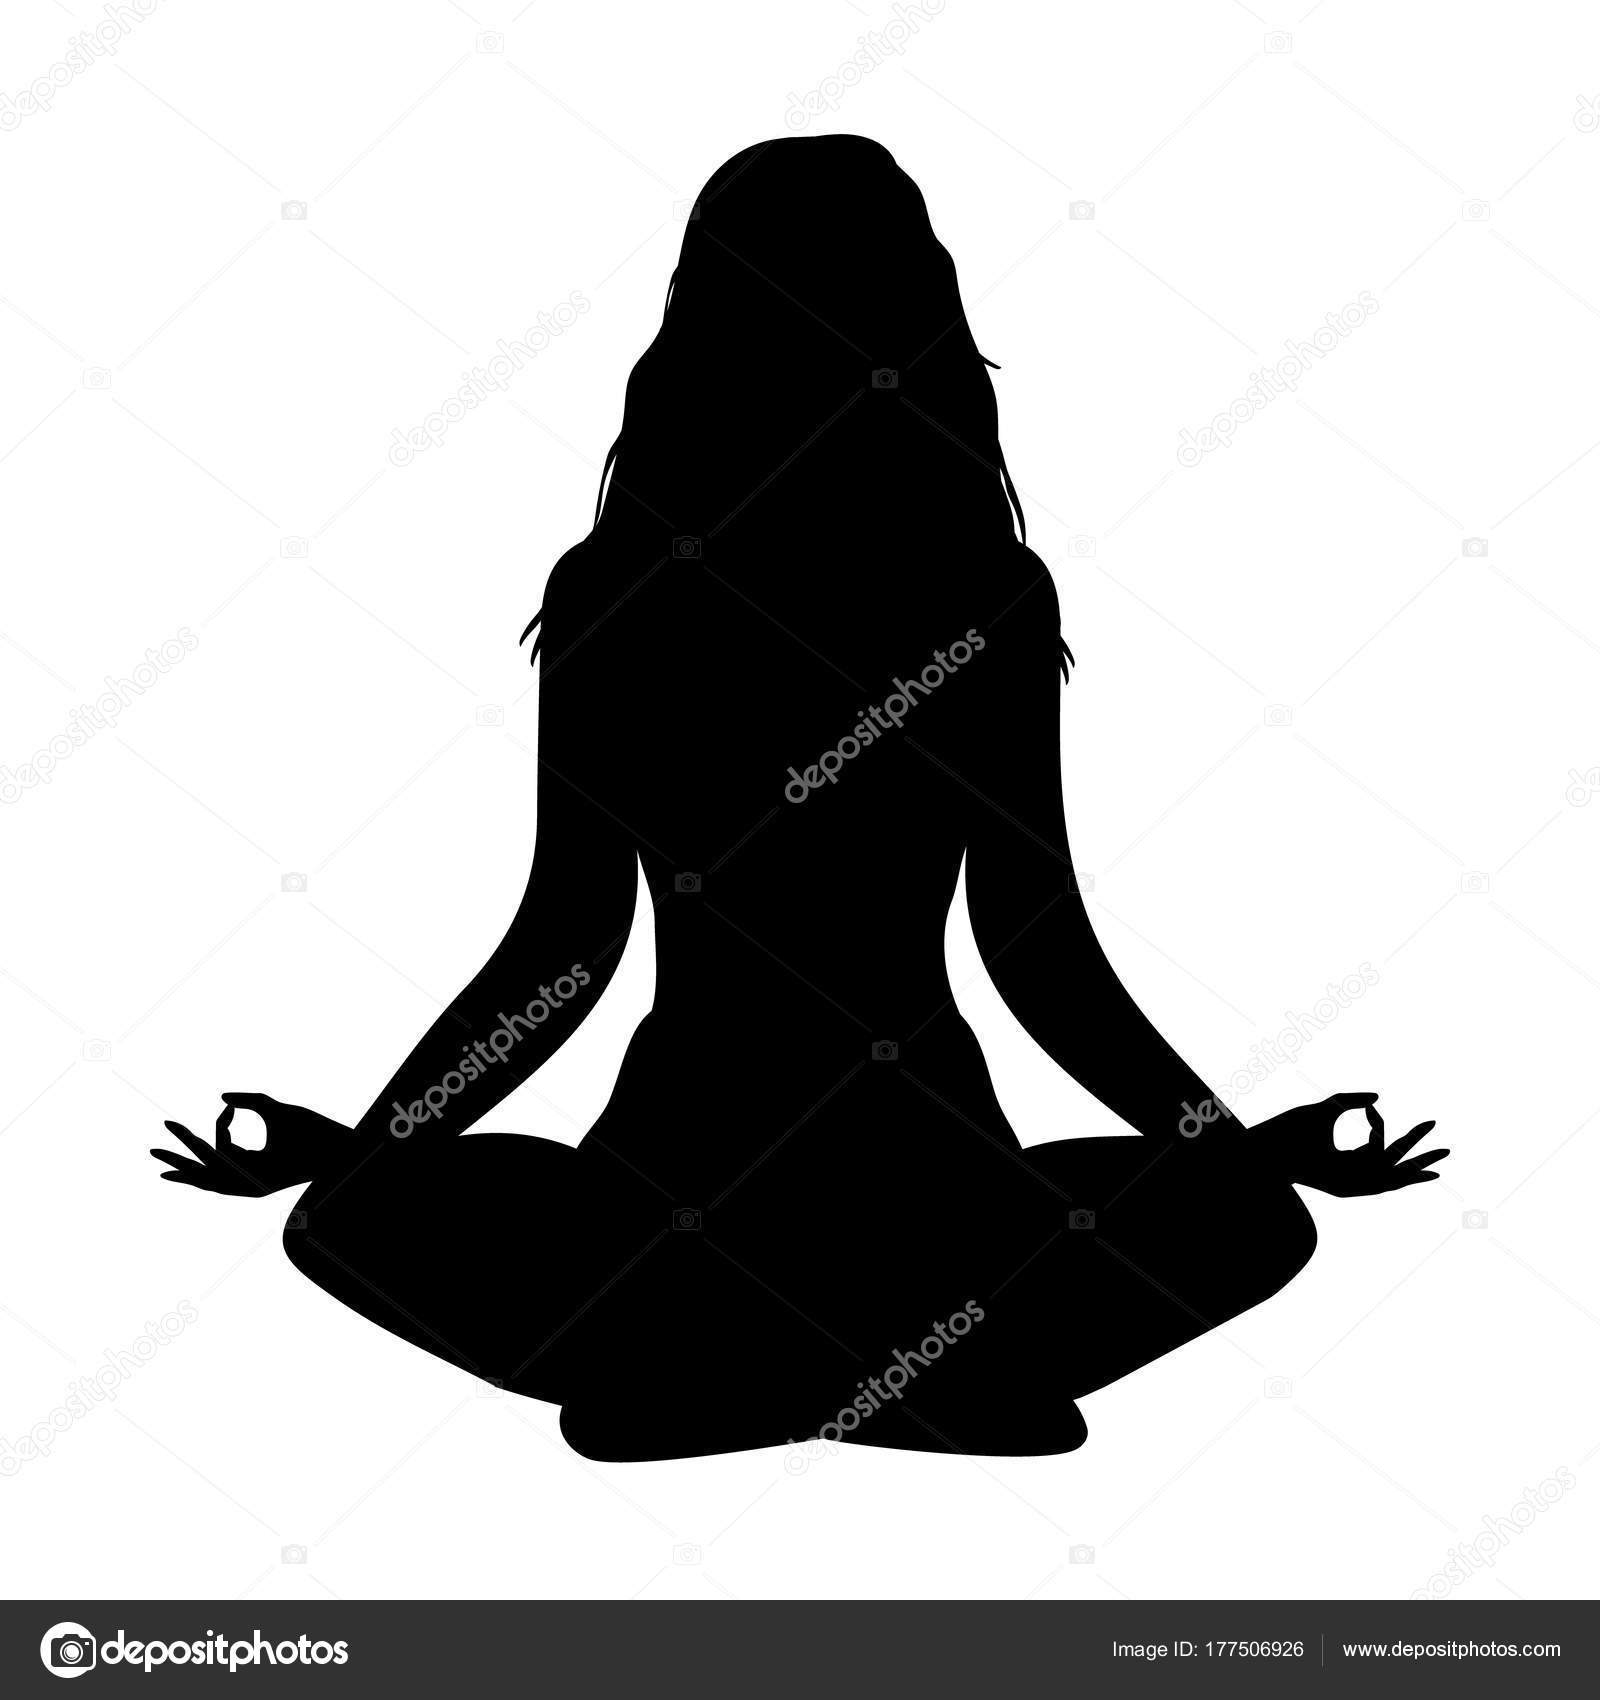 Lotus yoga position stock illustration. Illustration of practice - 79516939